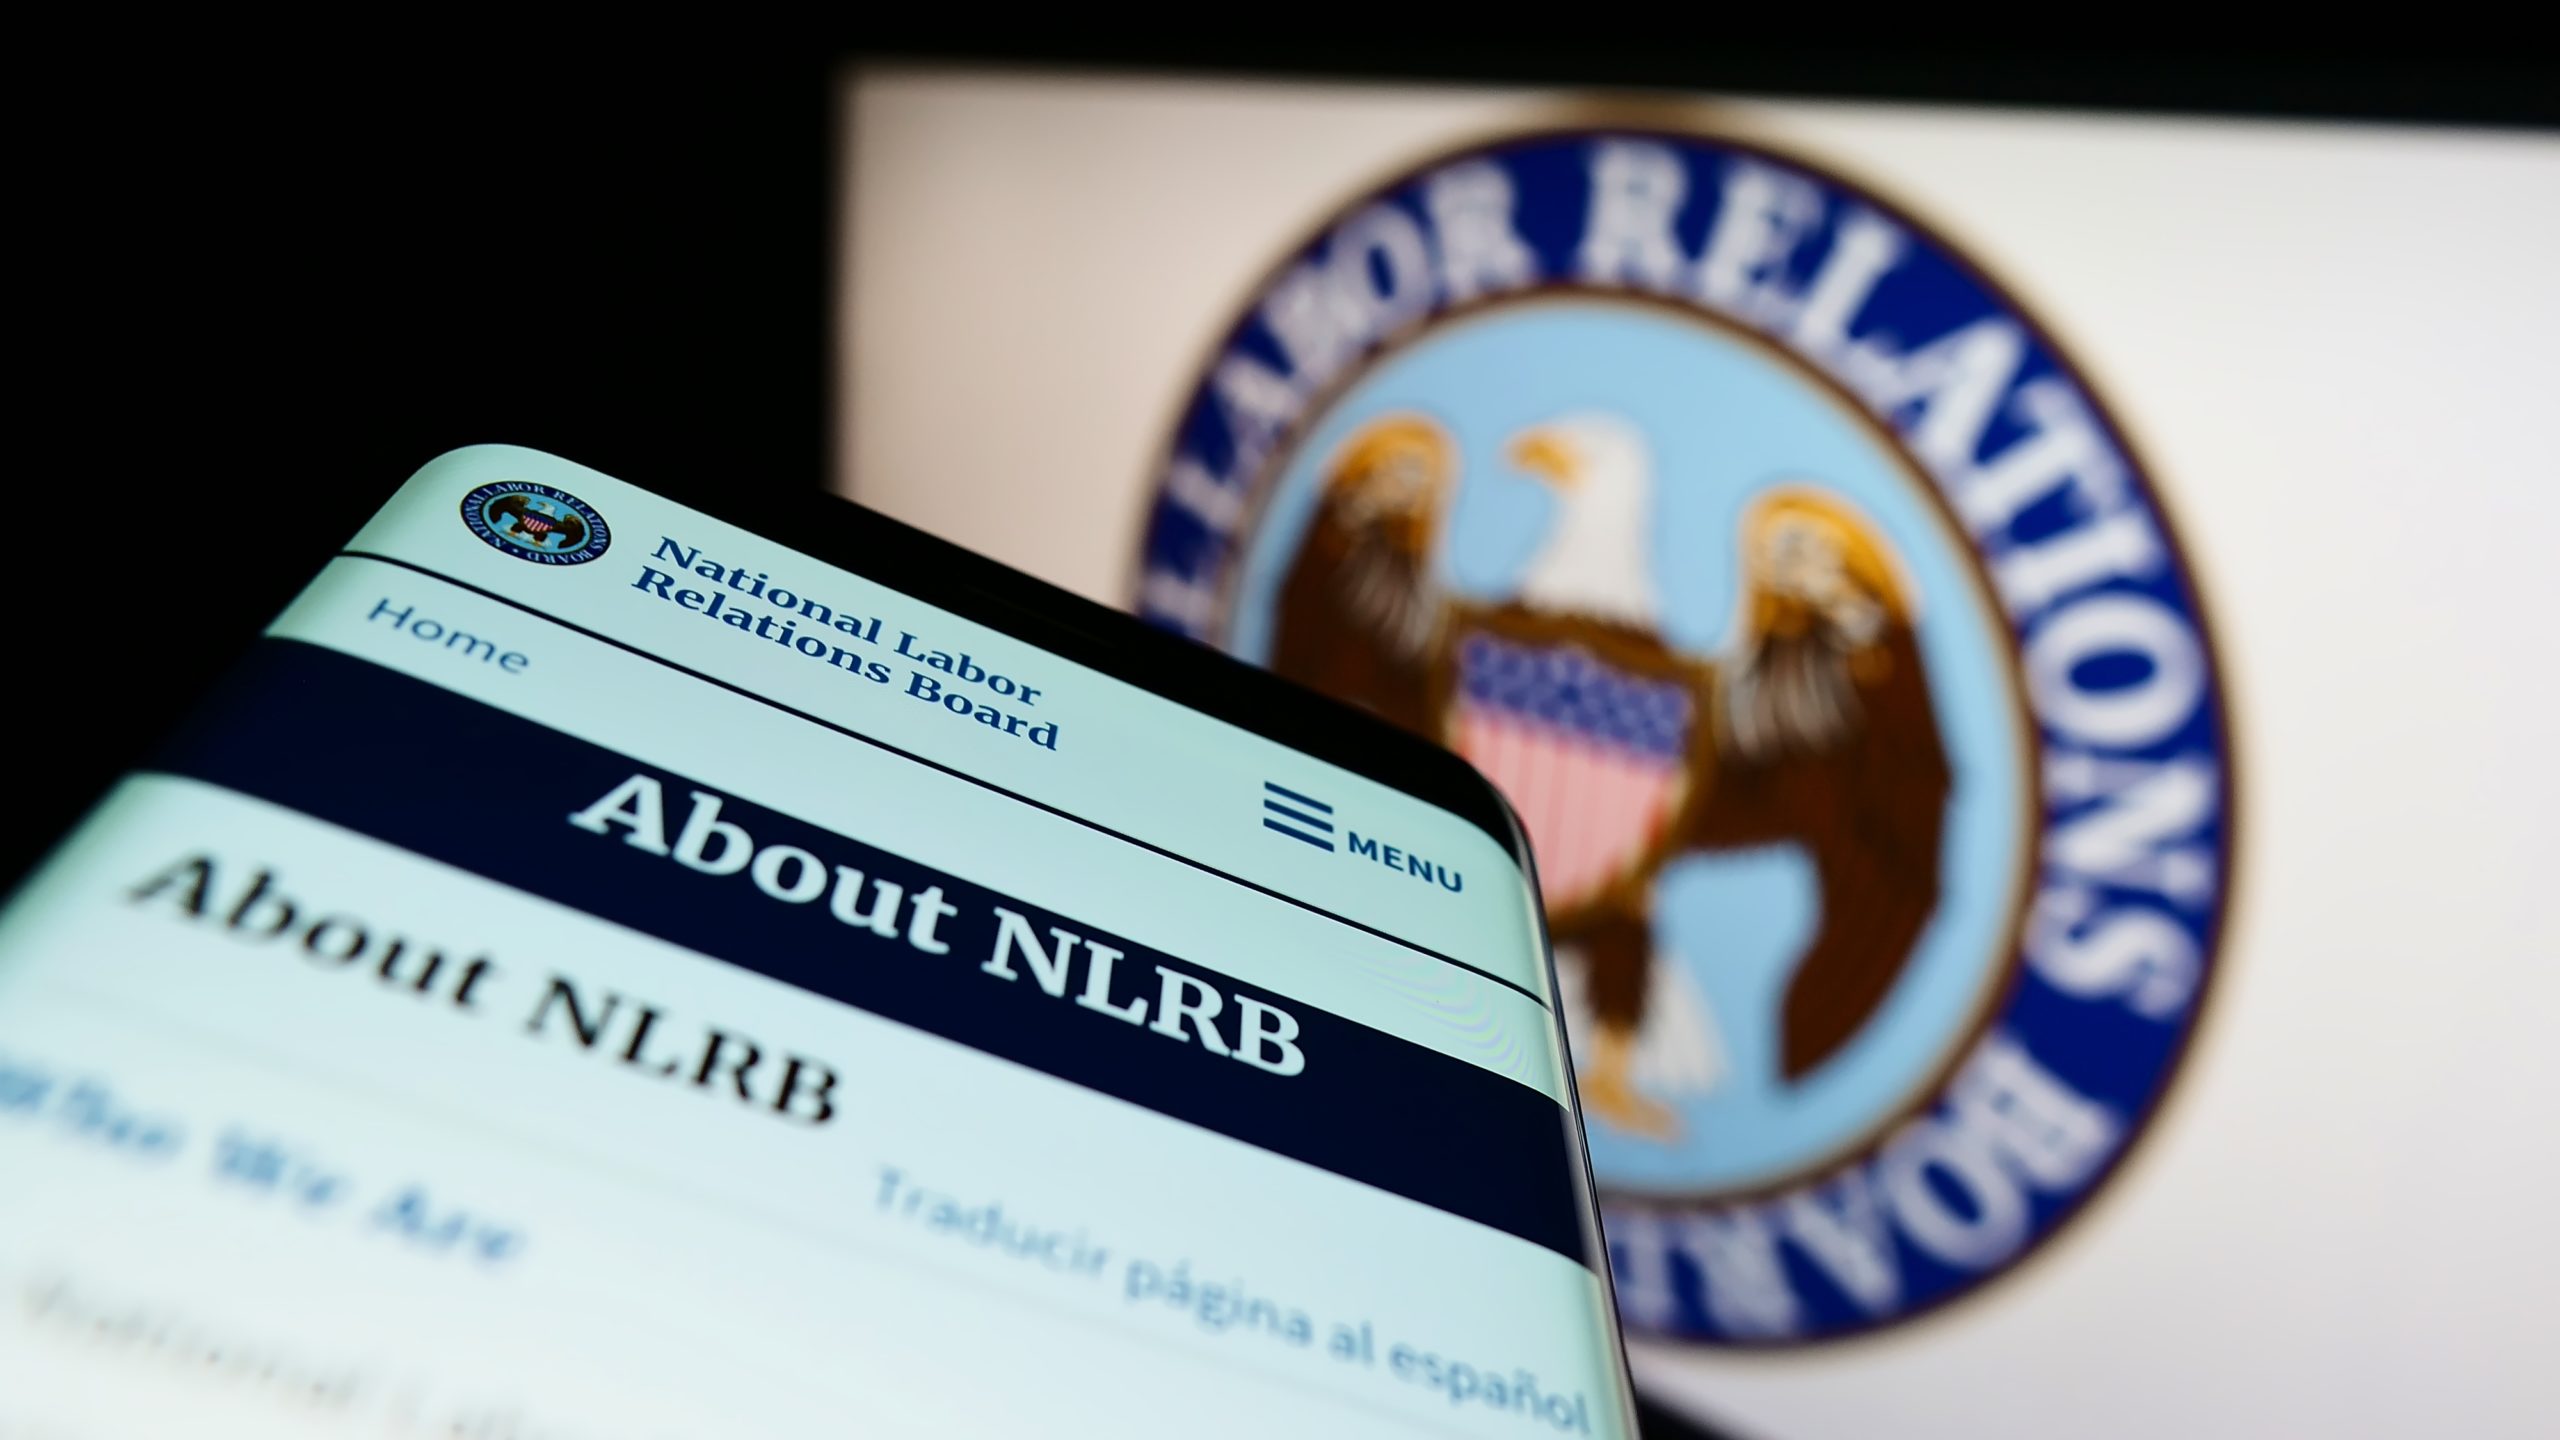 NLRB union begs for funding despite $274 million budget